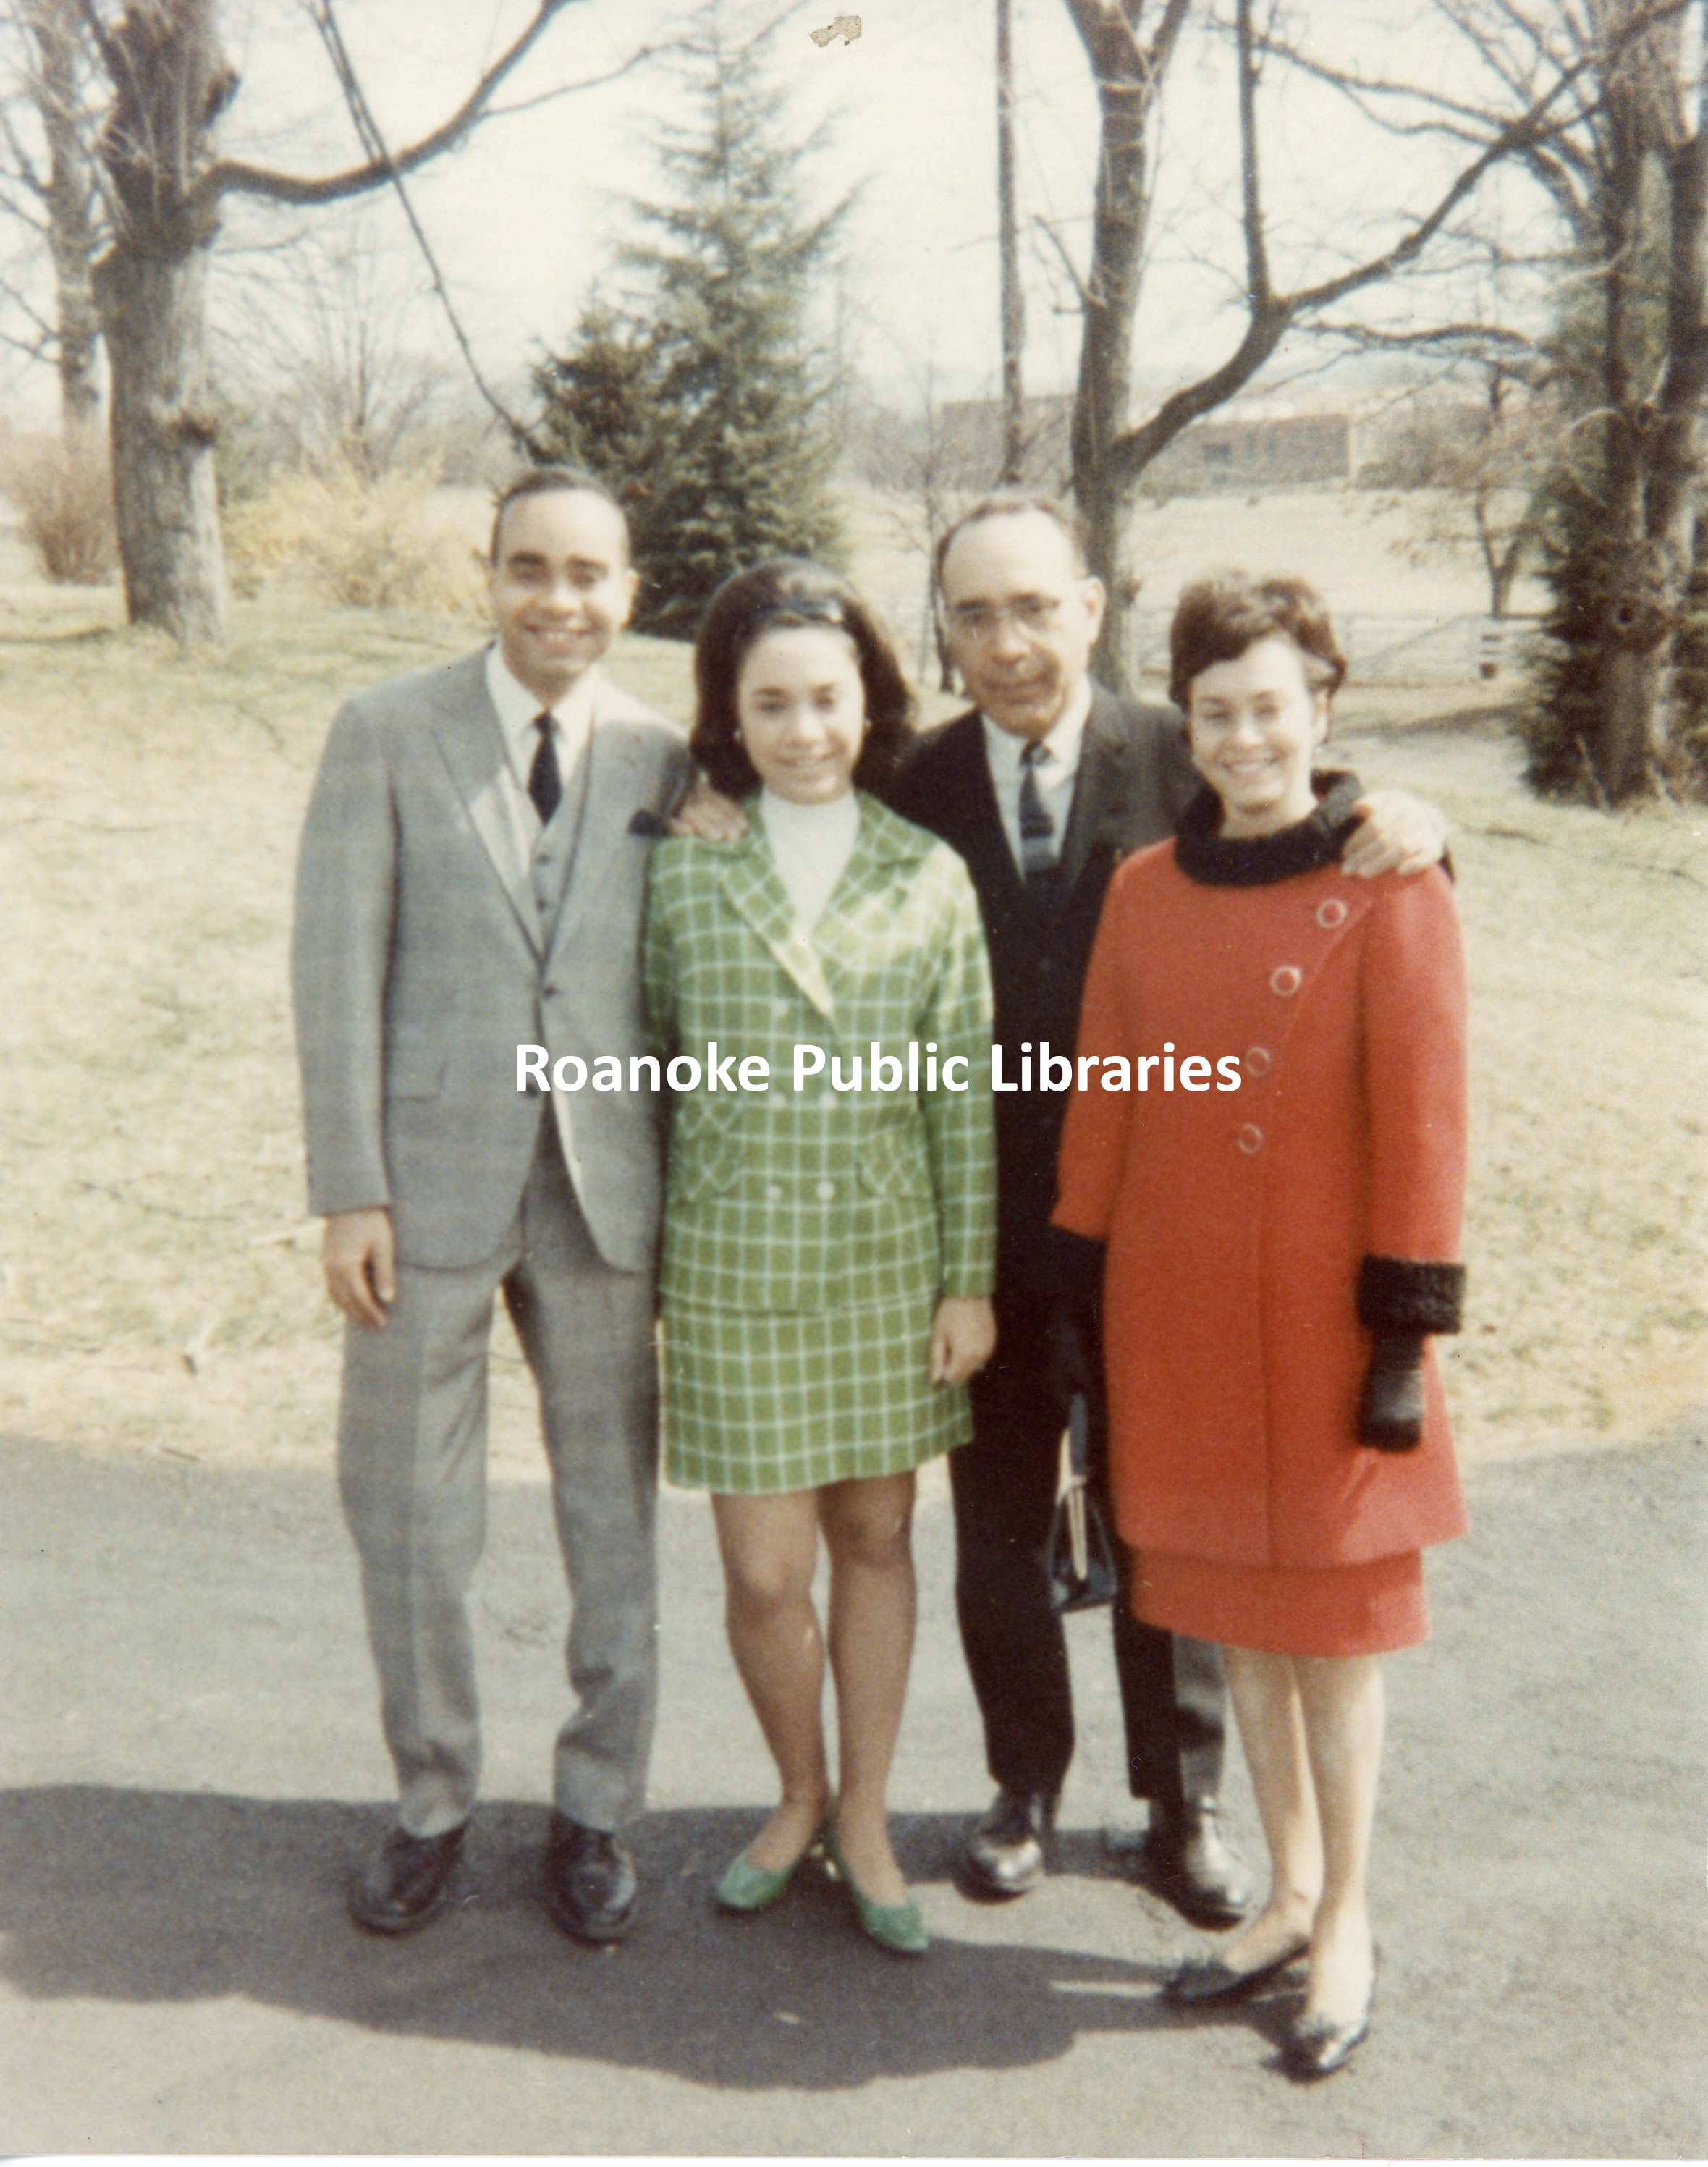 GB039 John Claytor III, Sandra Clytor, John B. Claytor Jr. and Ruth Claytor, Easter 1969.jpg